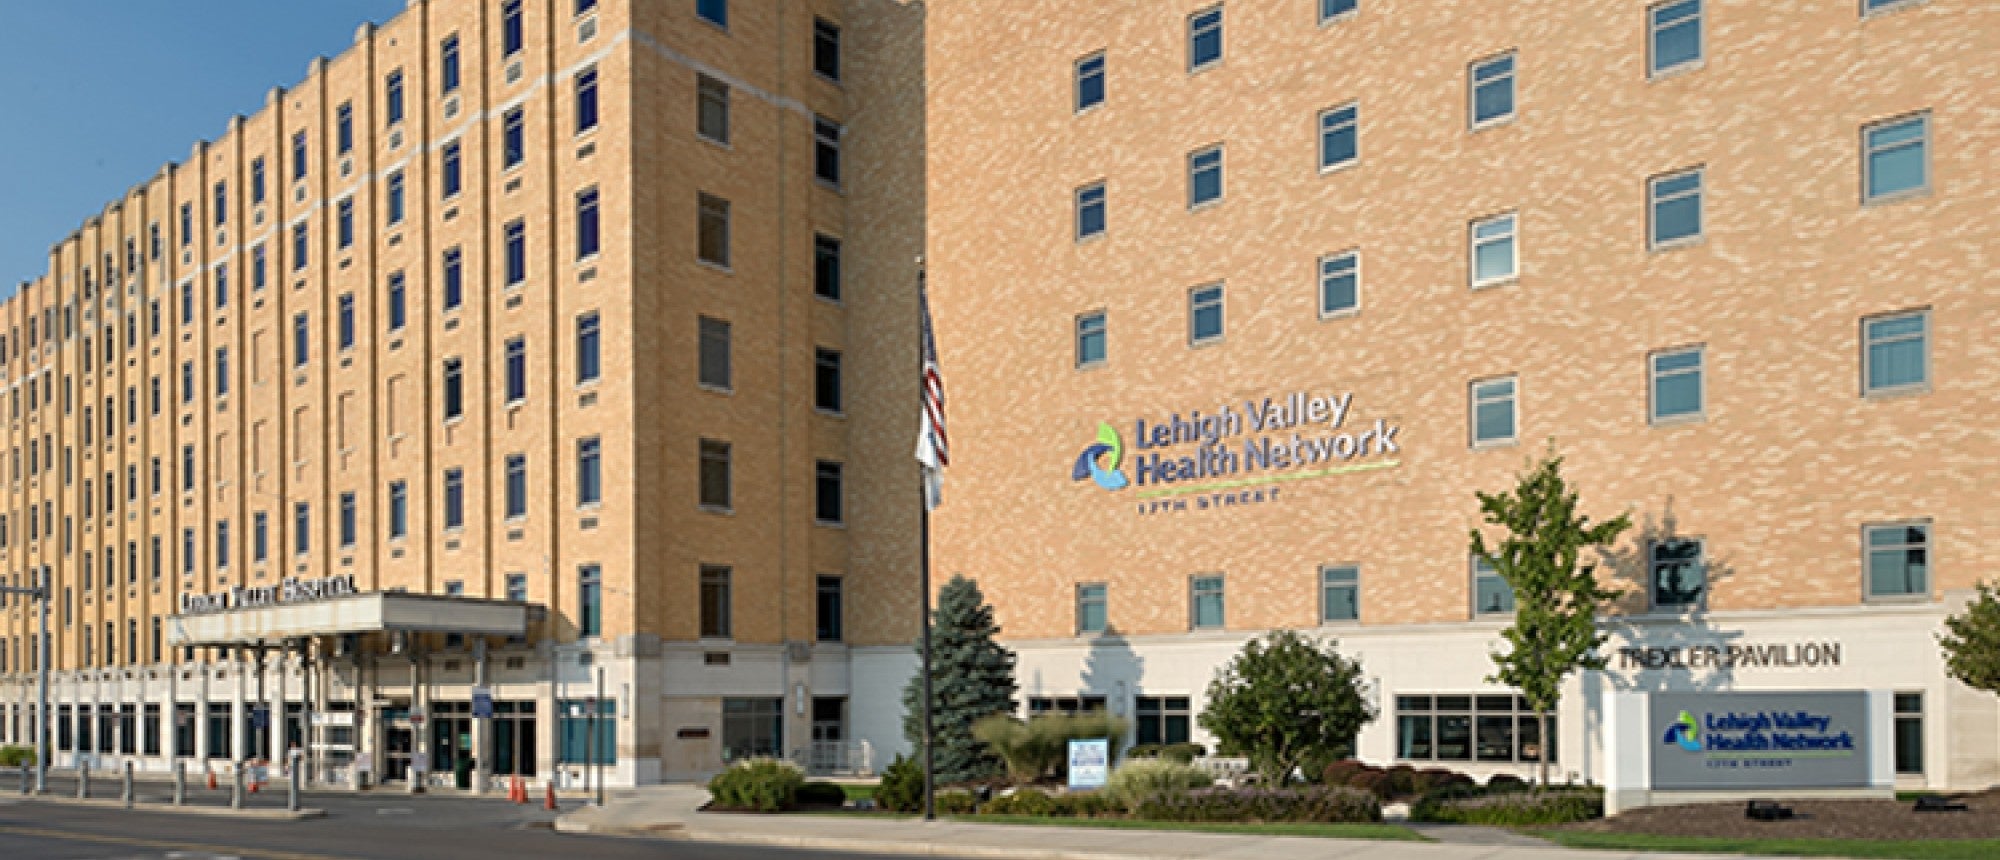 LVPG-Mental Health Clinic-17th Street